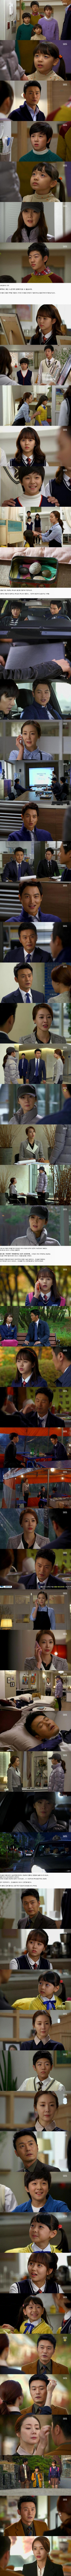 episode 13 captures for the Korean drama 'Suspicious Housekeeper'